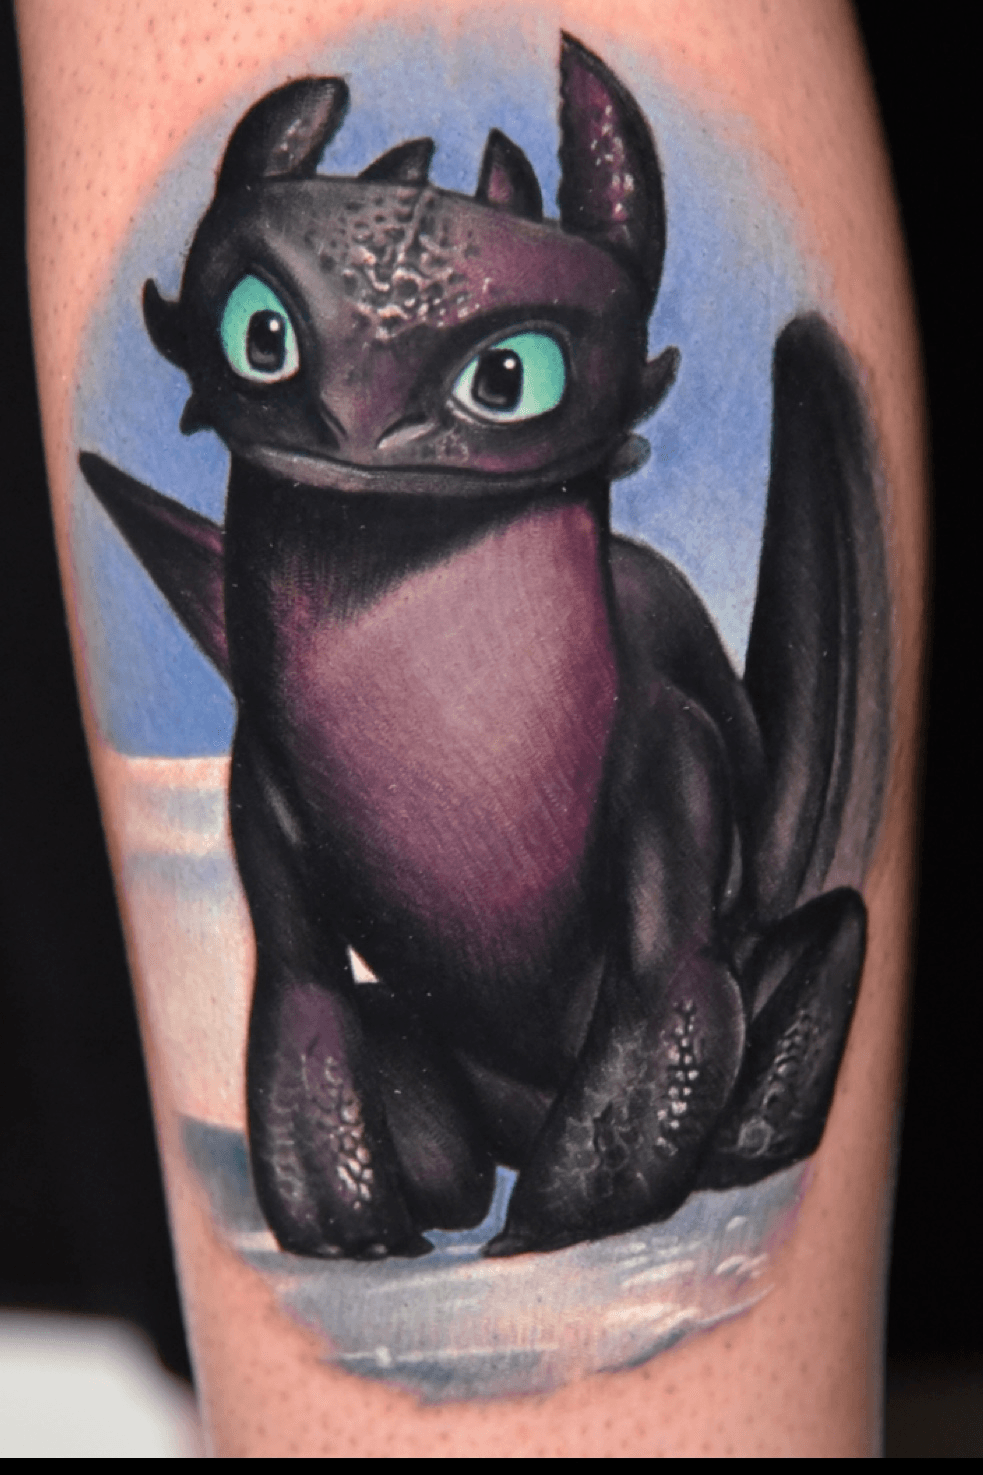 How to Train Your Dragon tattoo  Disney inspired tattoos Toothless  dragon tattoo Dragon tattoo sketch